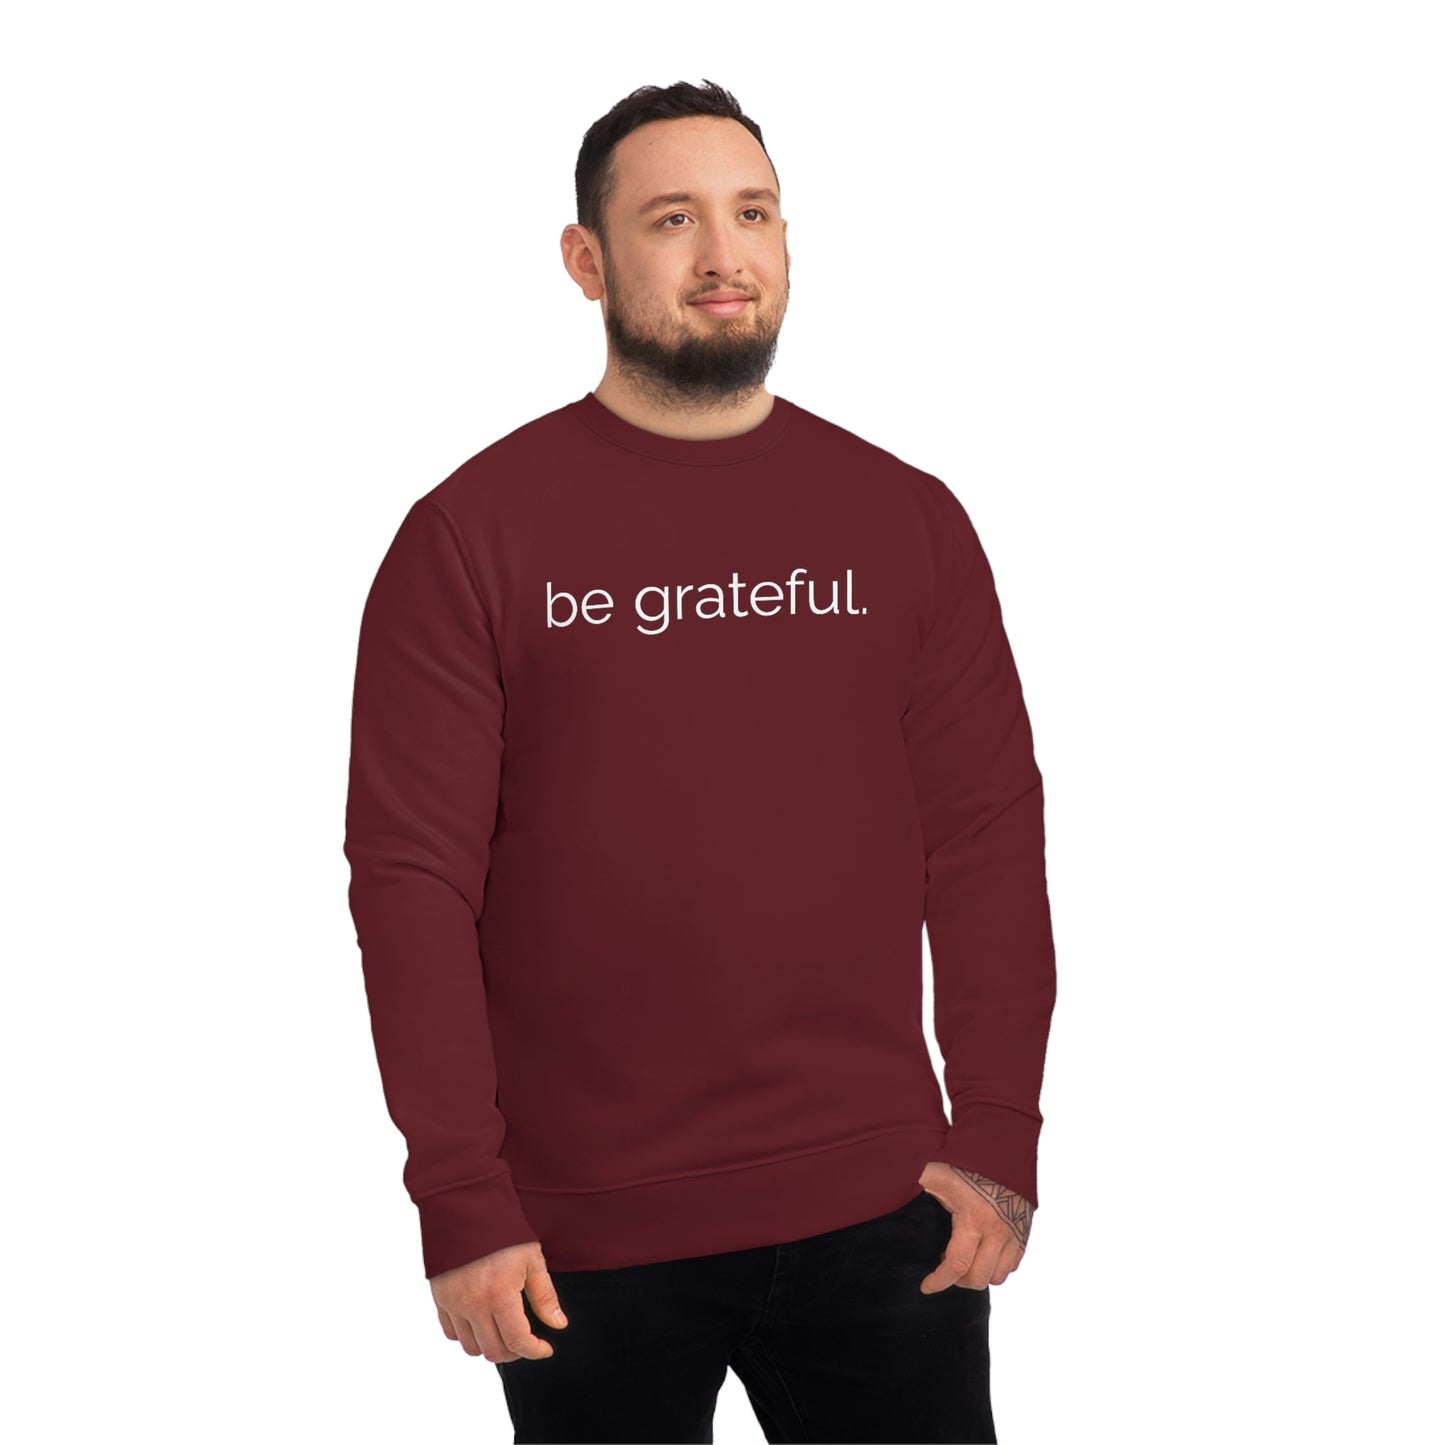 be grateful.